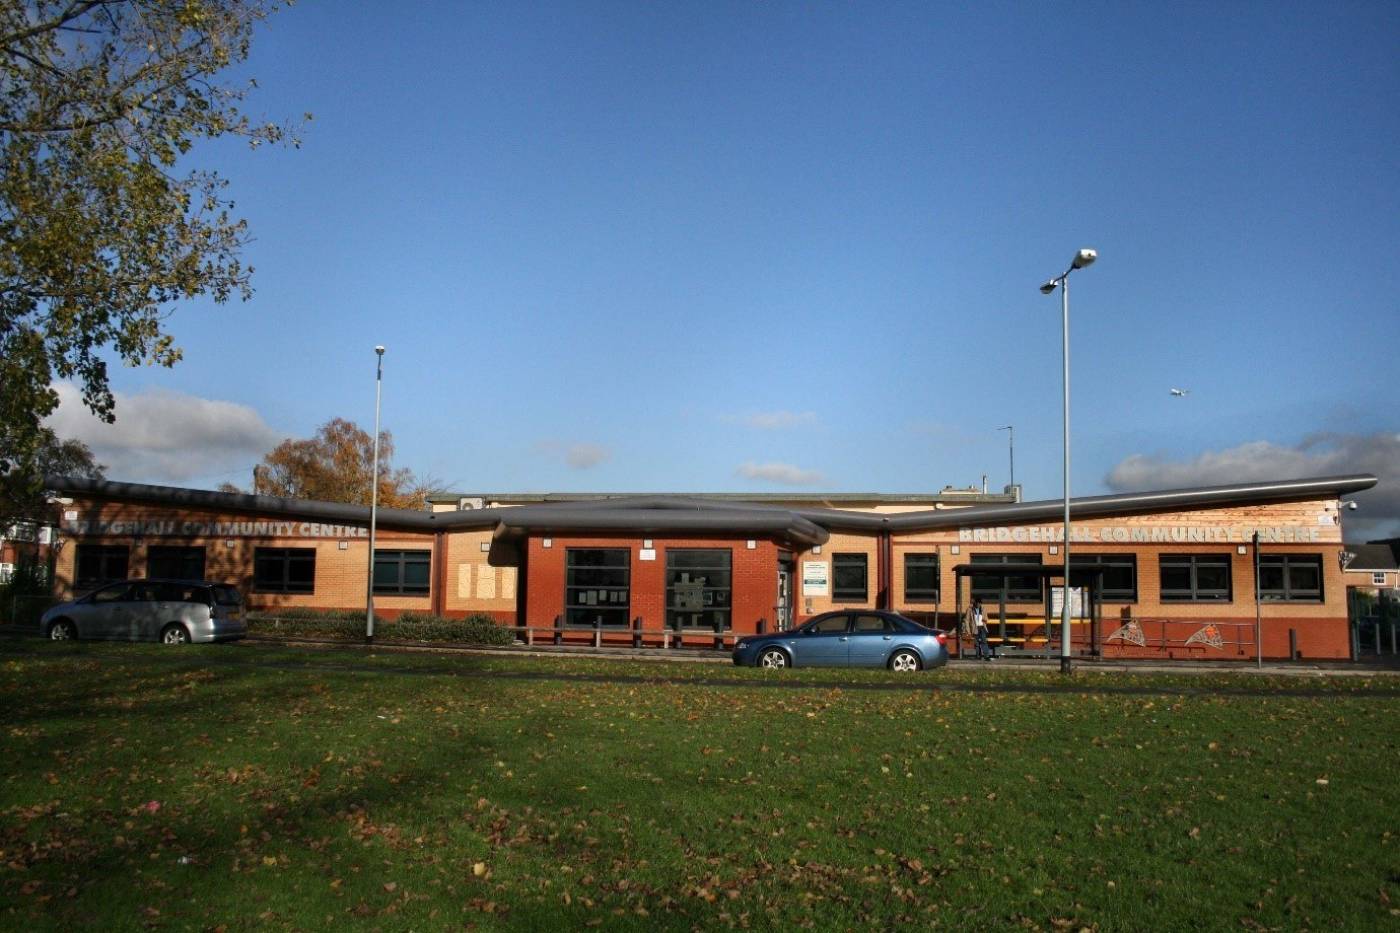 Bridgehall Community Centre Feature Image